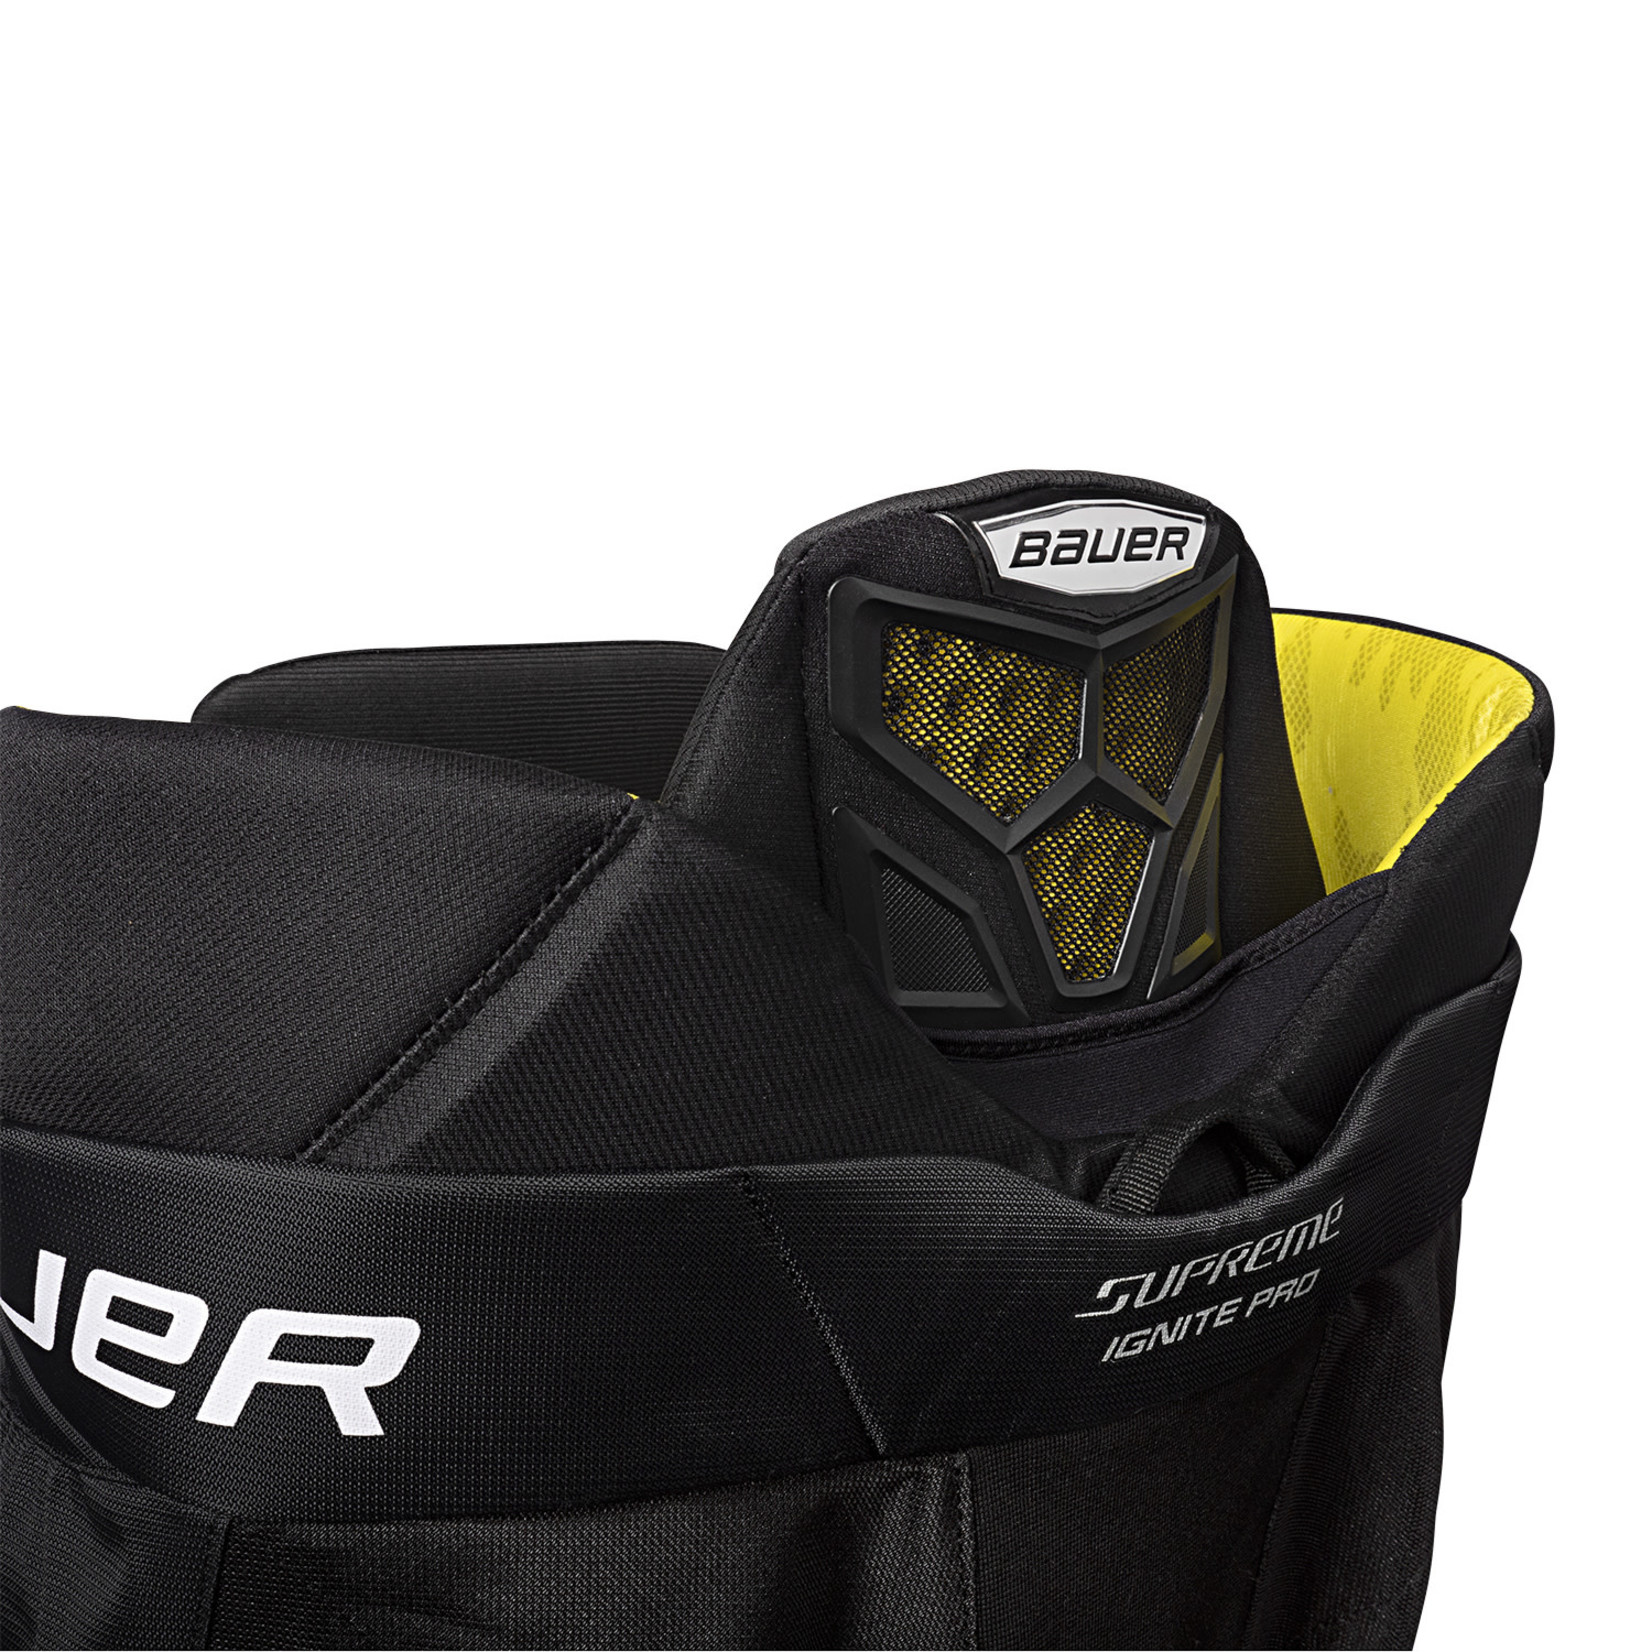 Bauer Bauer Hockey Pants, Supreme Ignite Pro, Senior